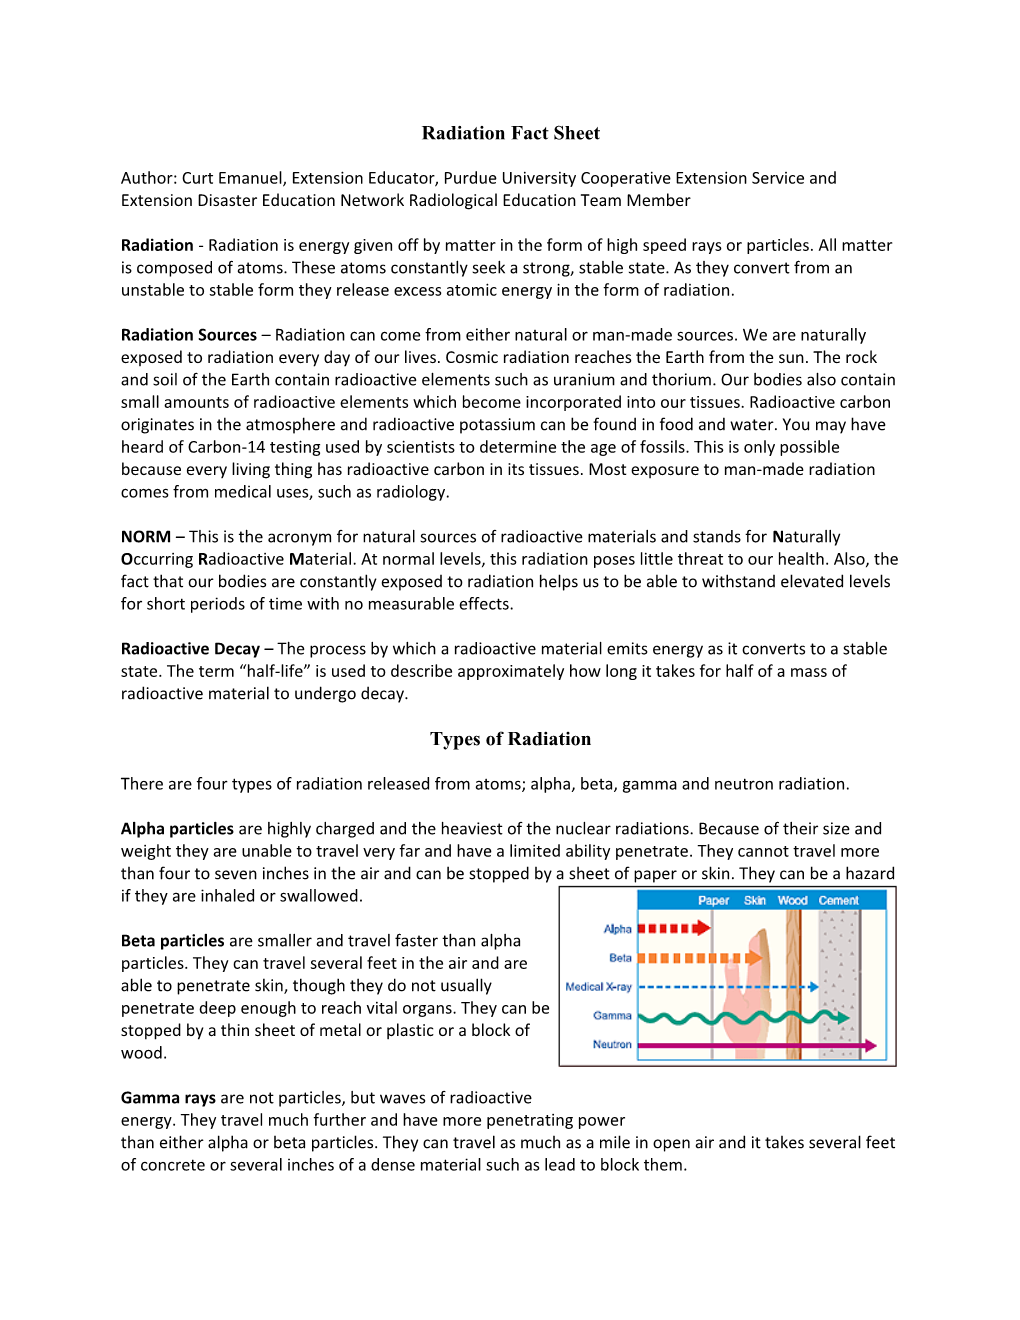 Radiation Fact Sheet - Curt Emanuel